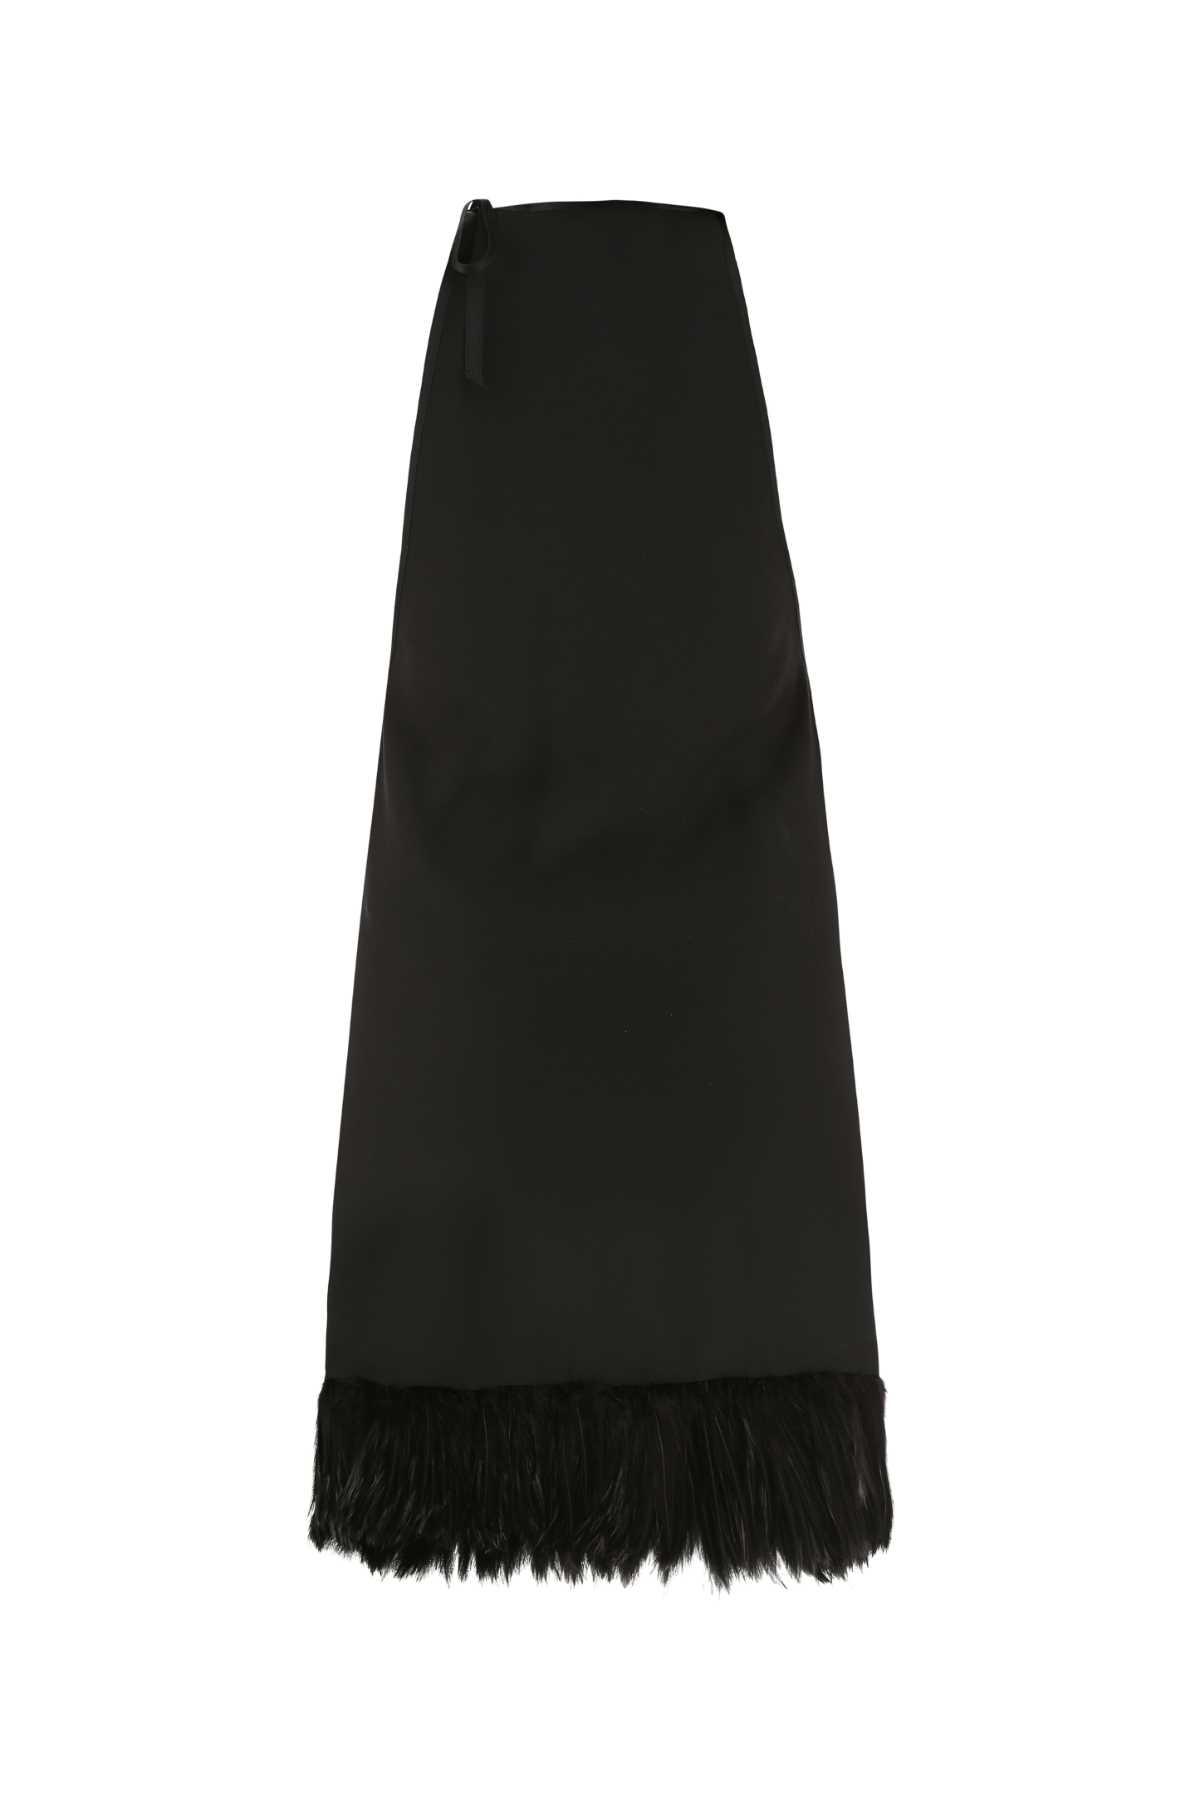 Saint Laurent Black Crepe Mini Dress In 1000